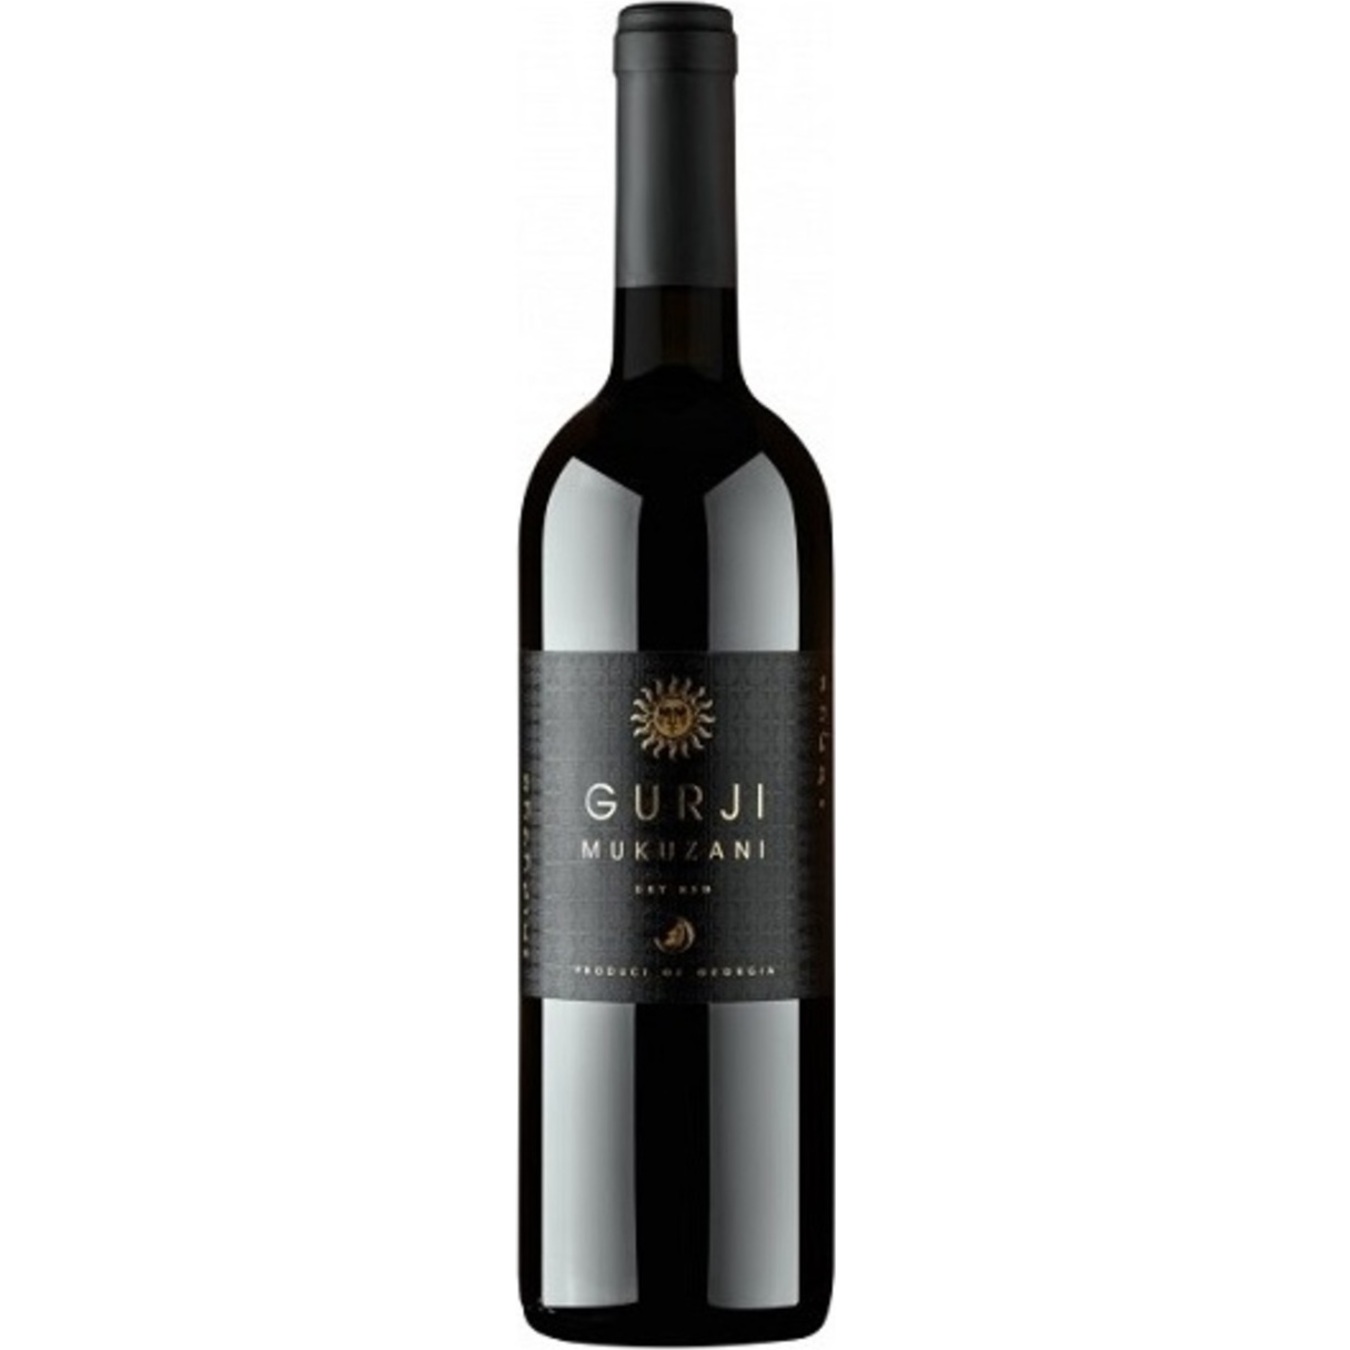 Gurji Mukuzani red dry wine 12% 0.75 l 2